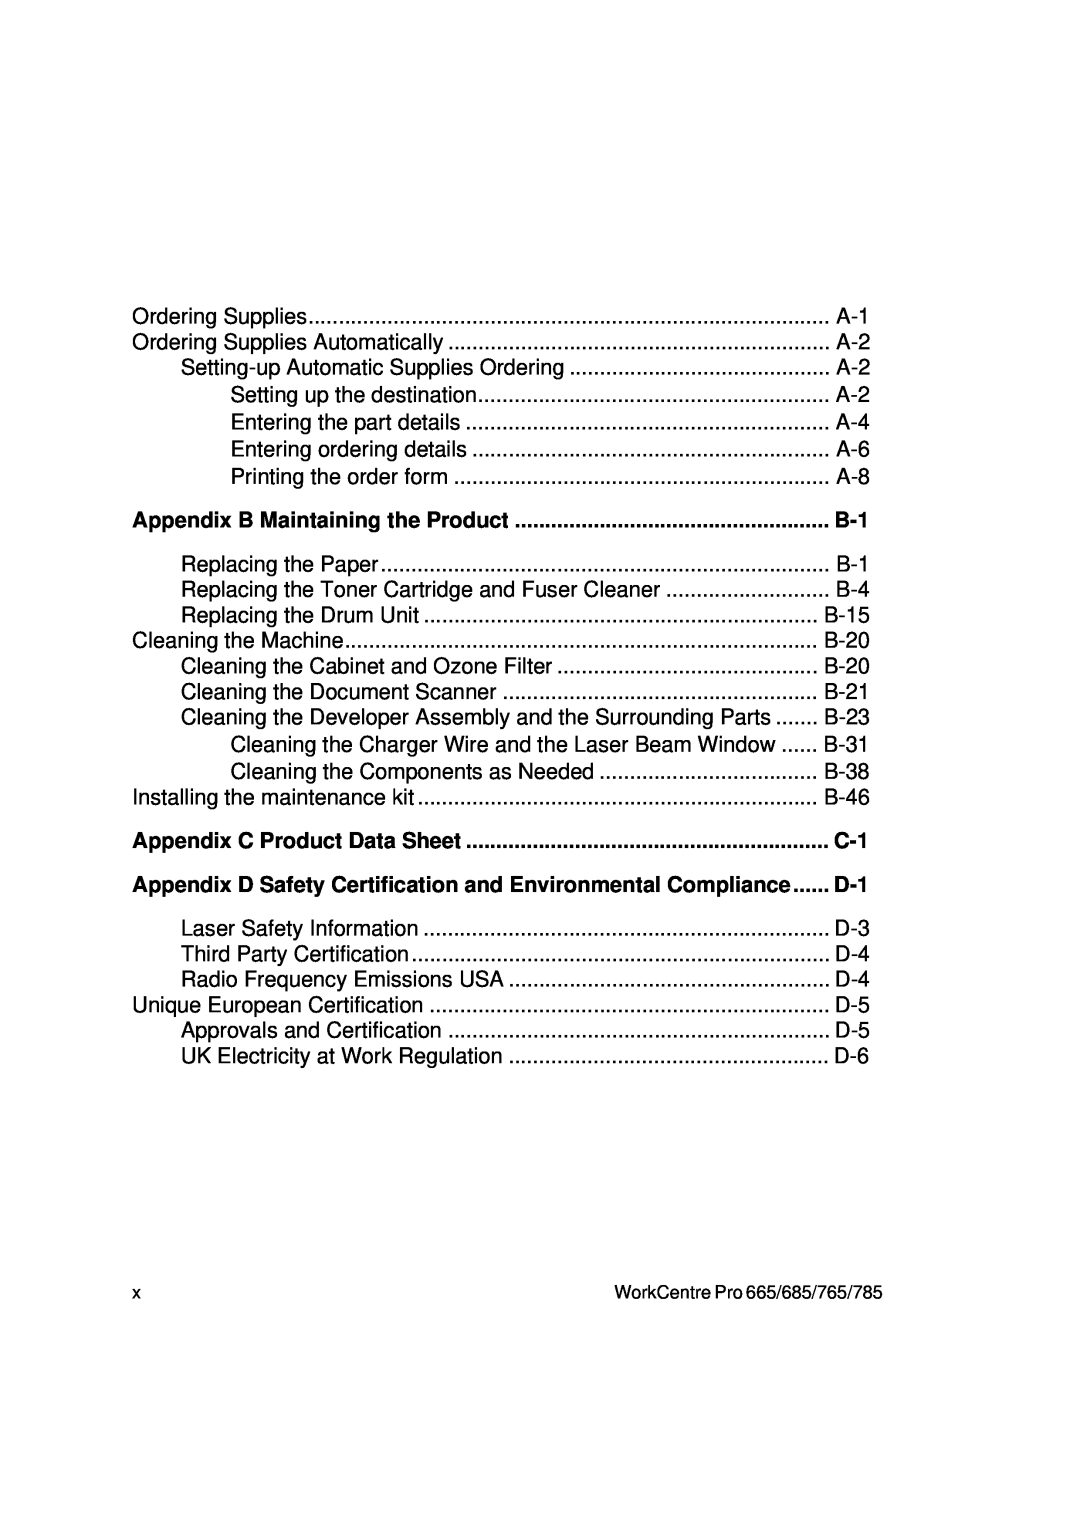 Xerox 765, 665, 685, 785 manual Appendix B Maintaining the Product, Appendix C Product Data Sheet 